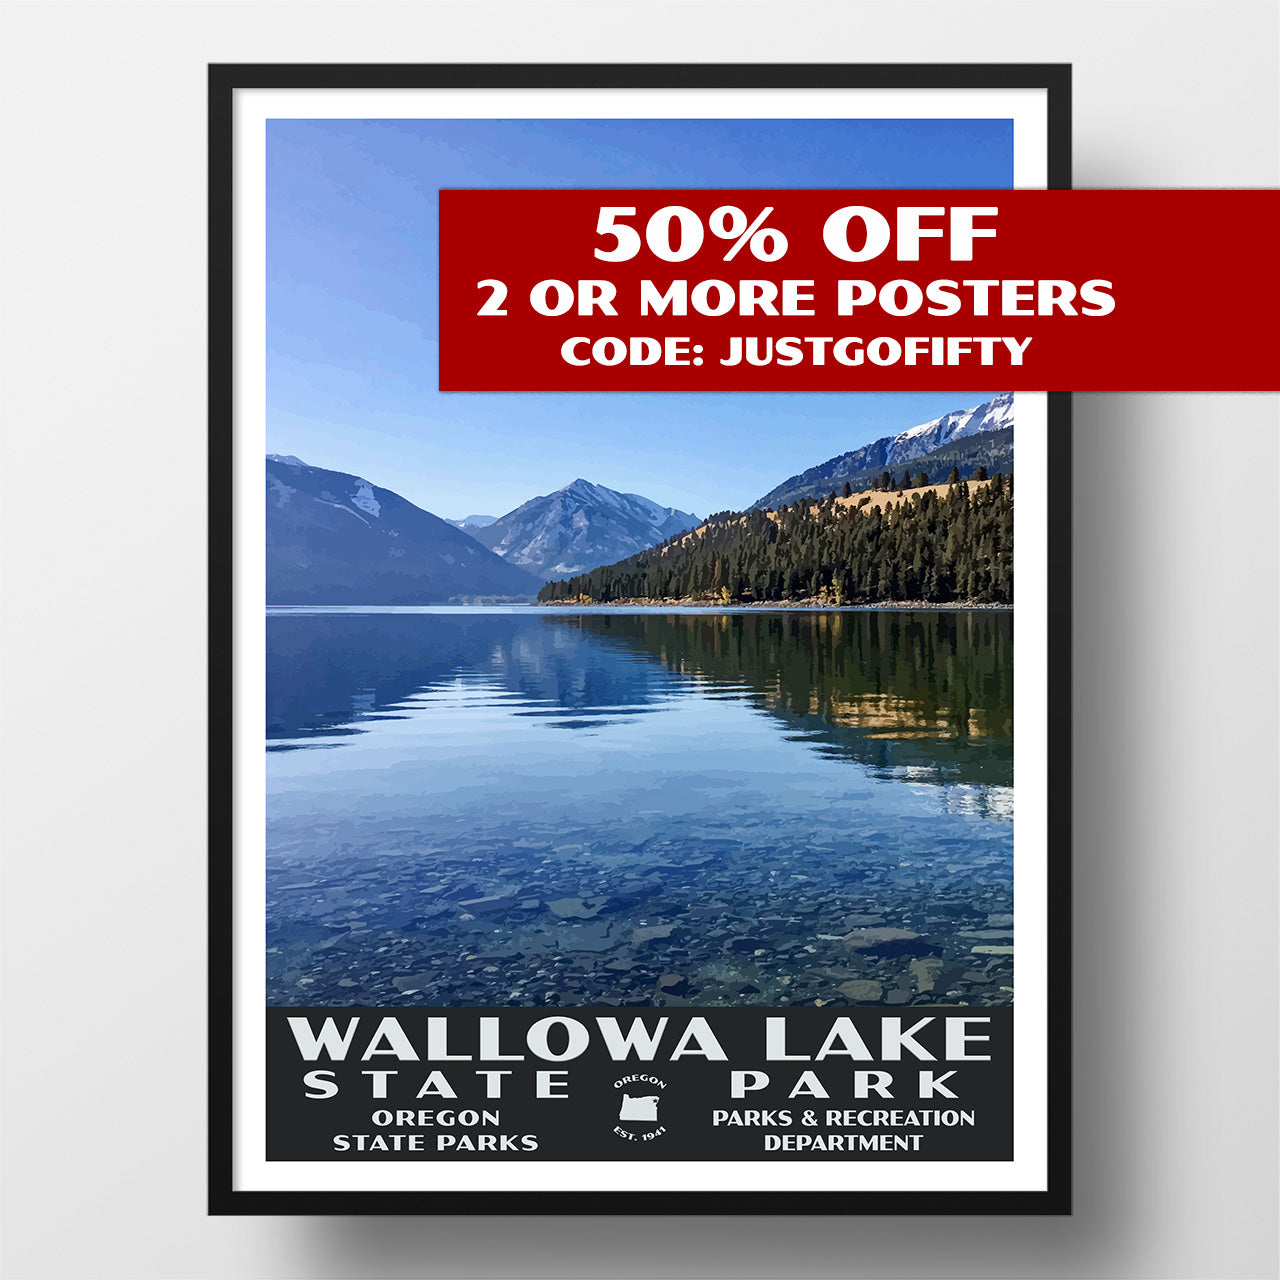 Wallowa Lake State Park poster